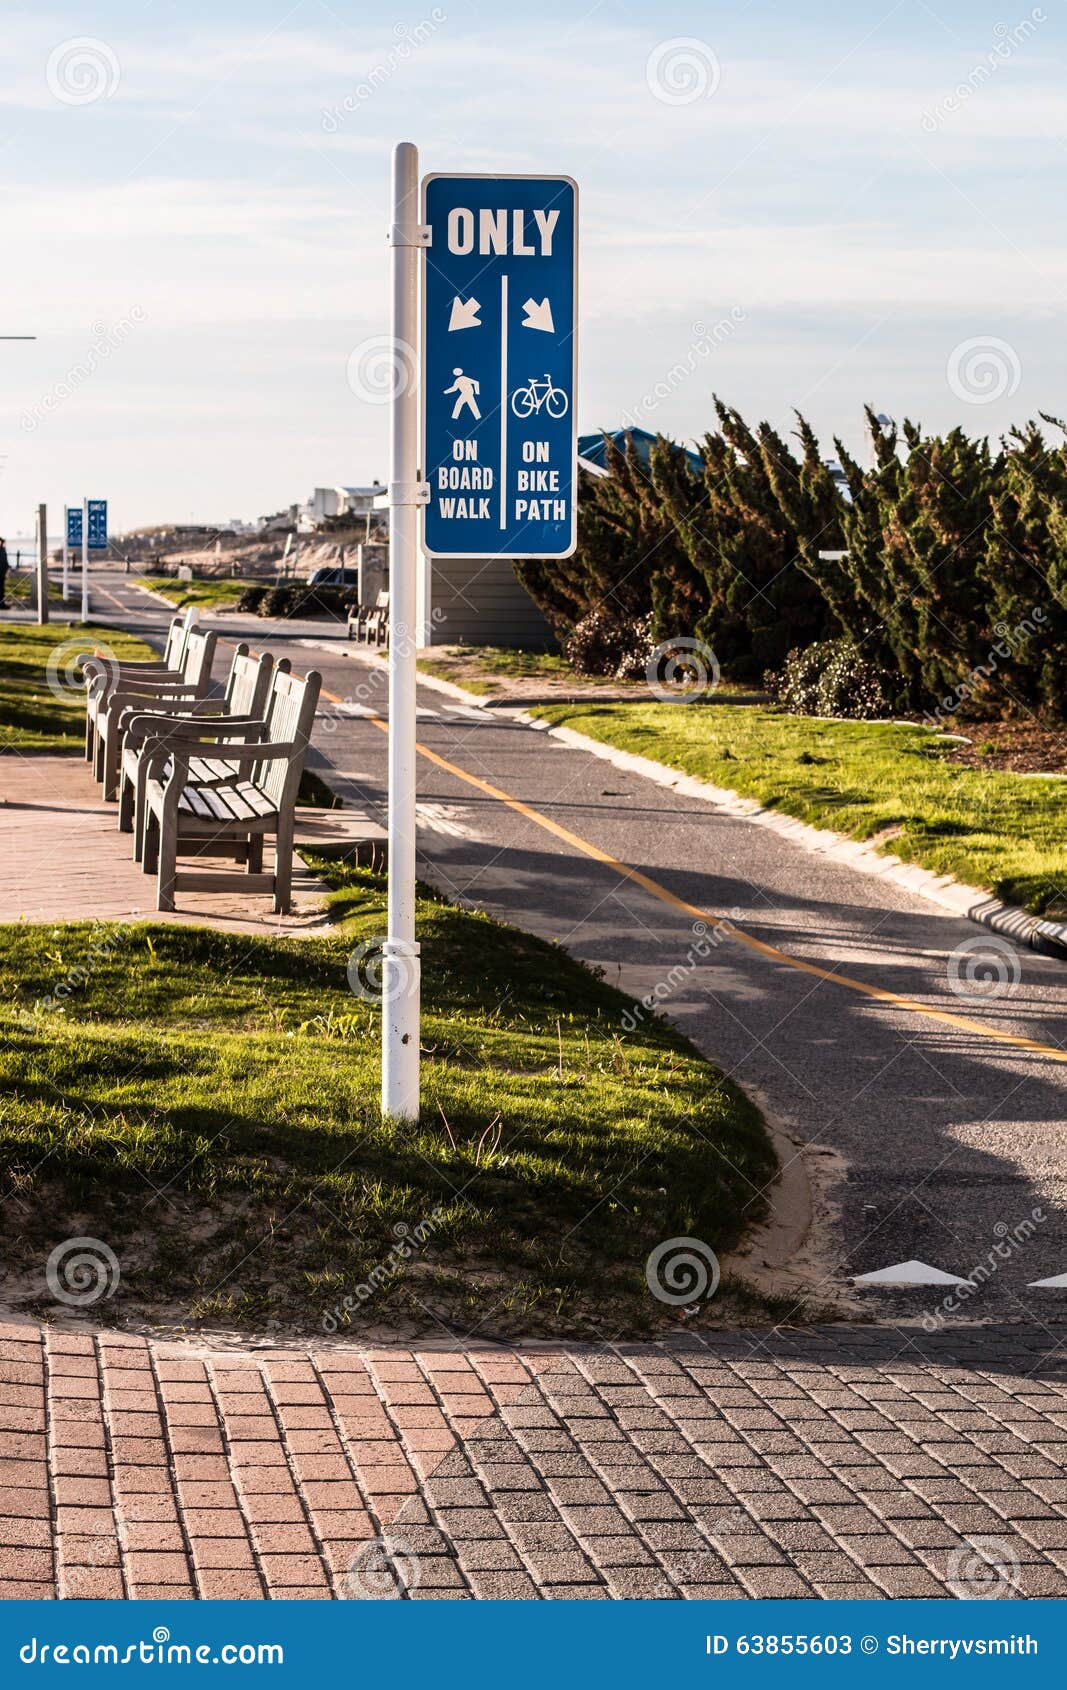 virginia beach boardwalk bike path and benches